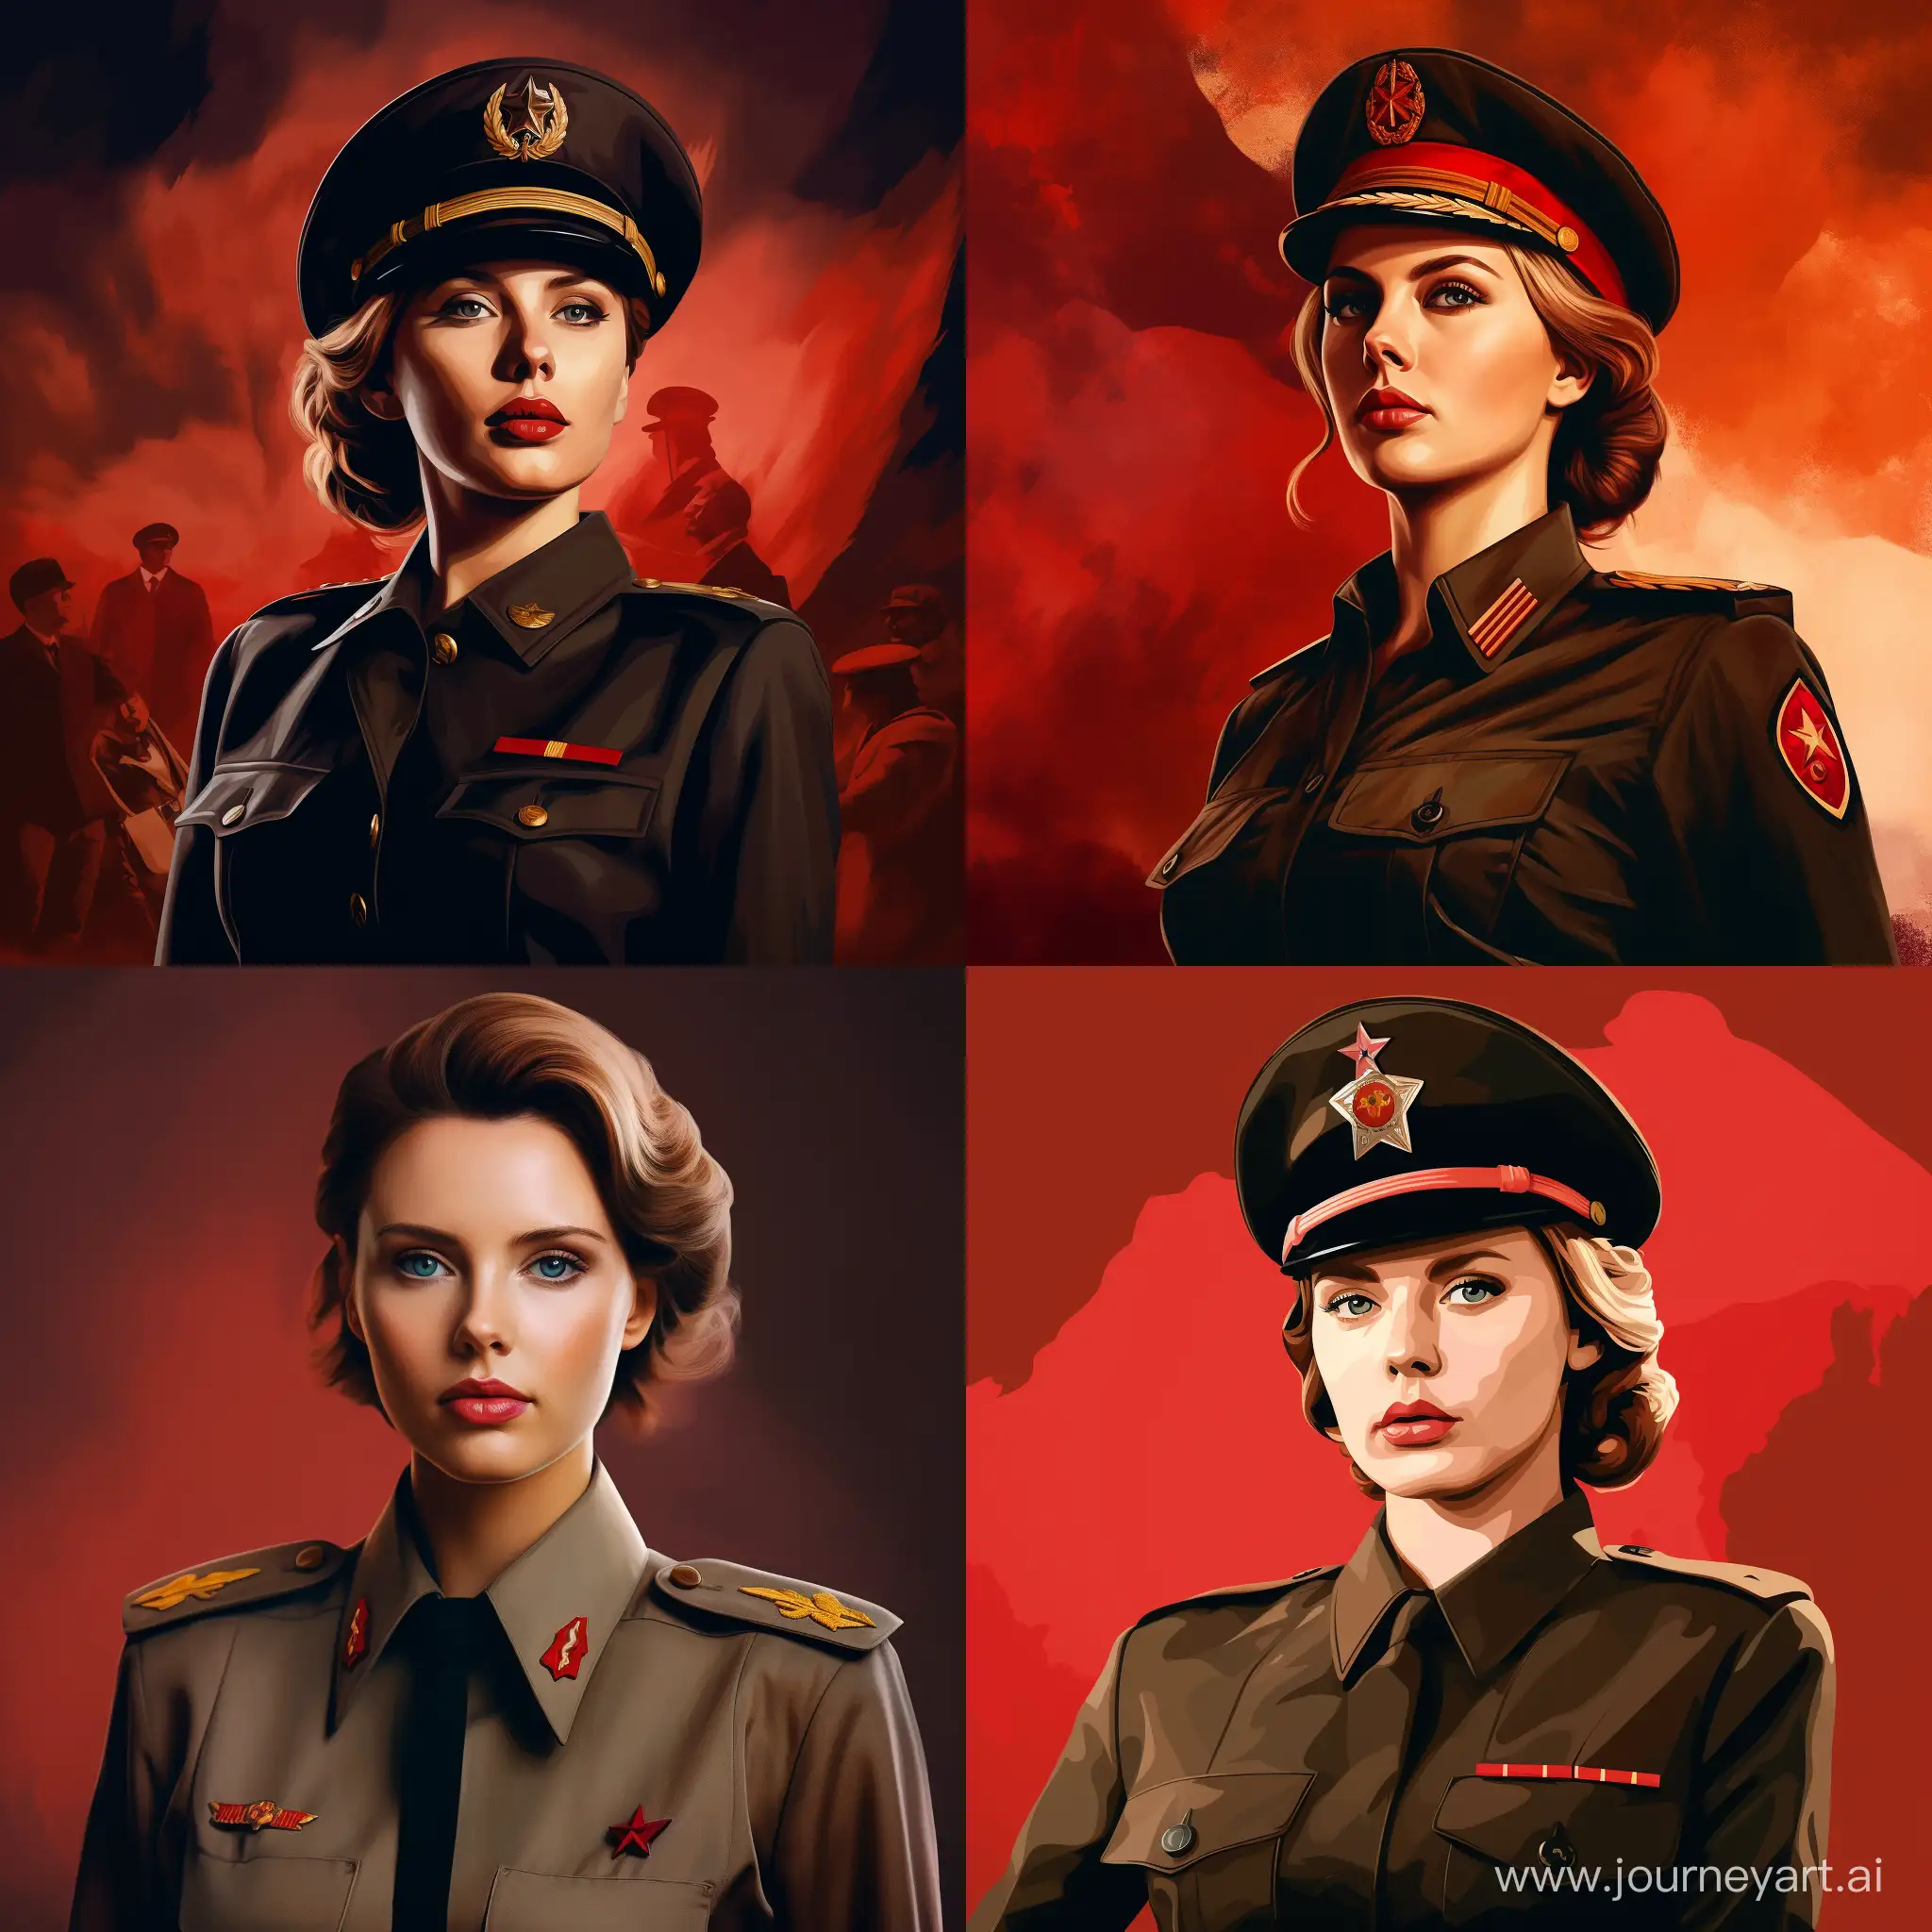 Scarlett-Johansson-as-Soviet-General-Secretary-in-Revolutionary-Military-Portrait